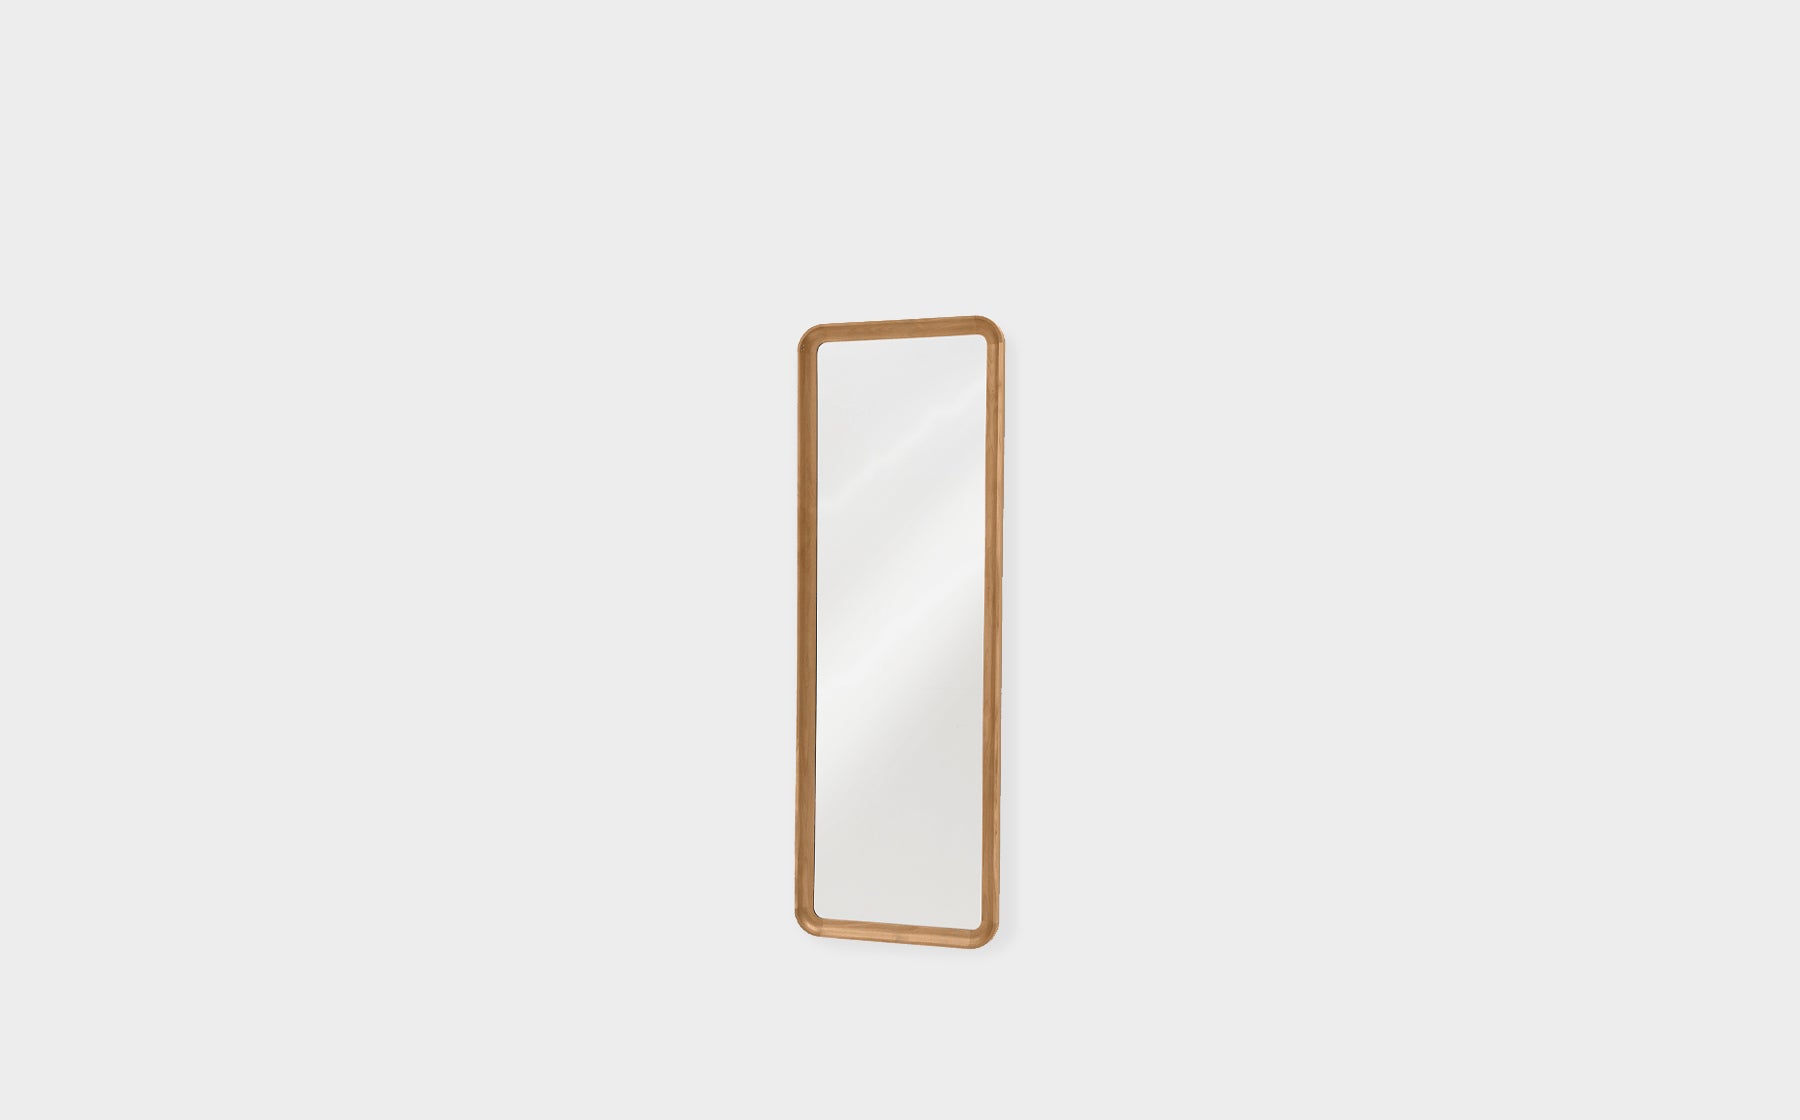 Olsen Mirror - Rectangle